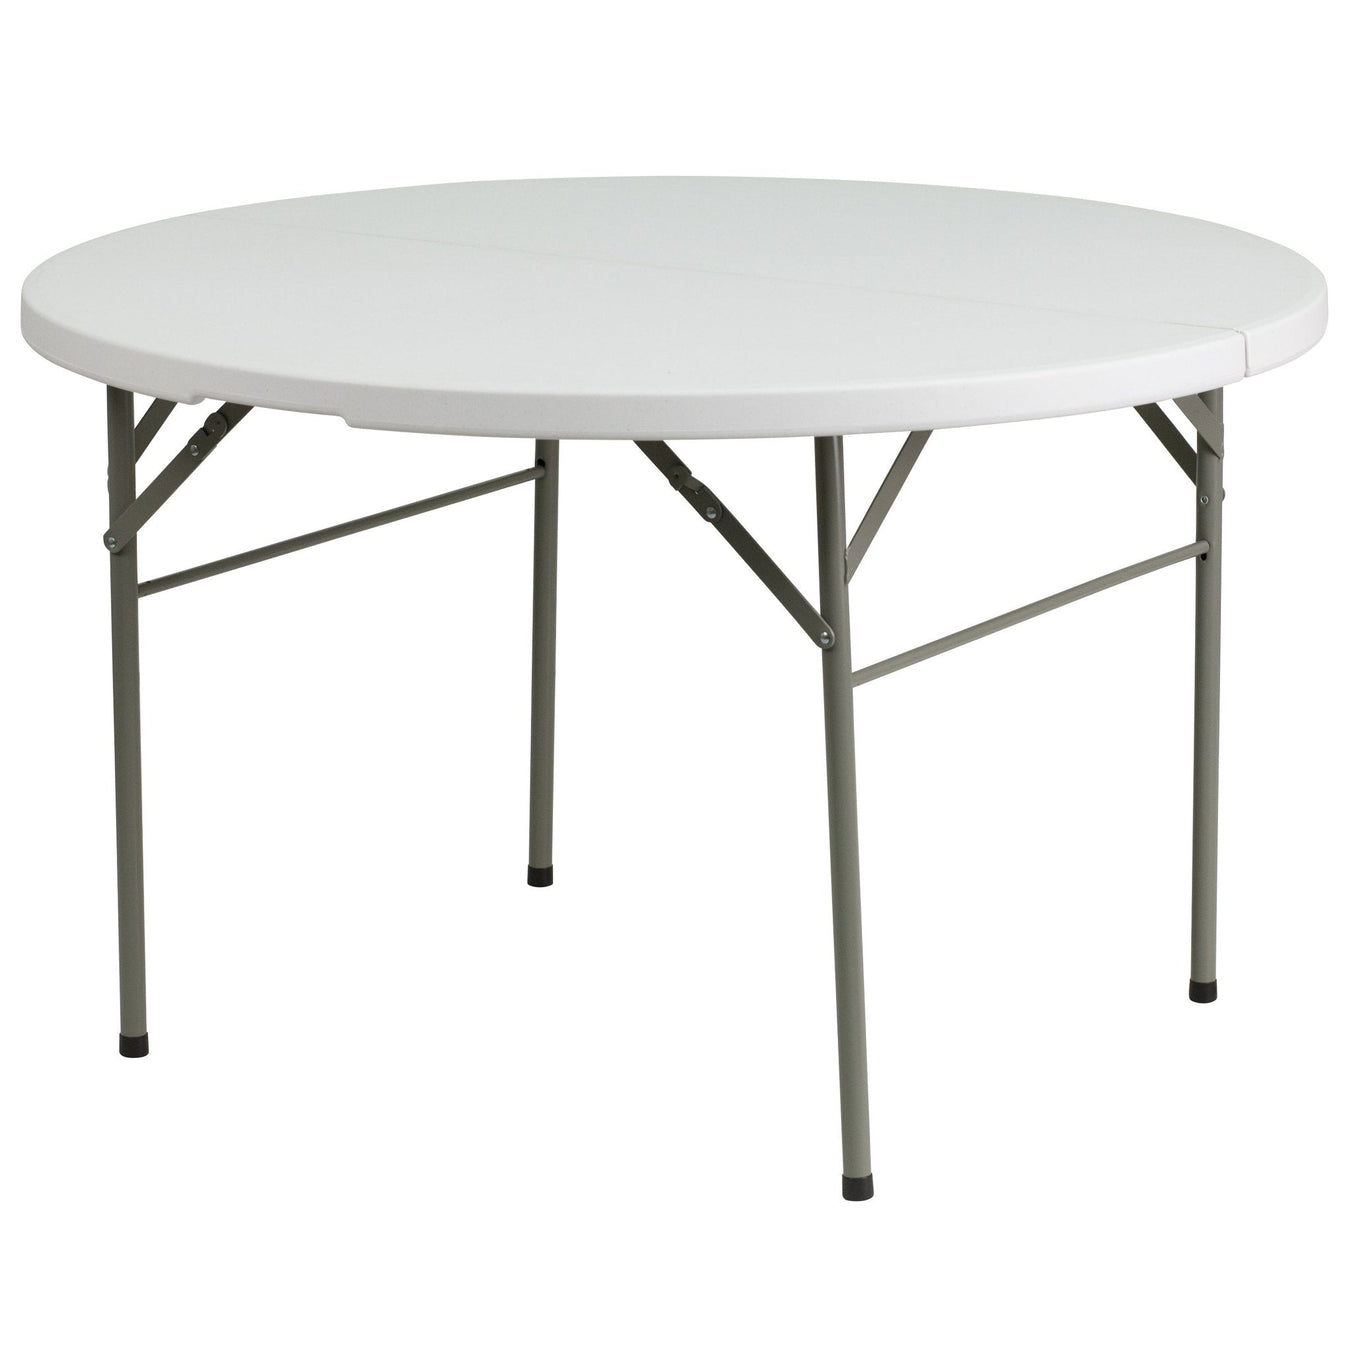 4' Bi-Fold Round White Plastic Folding Table